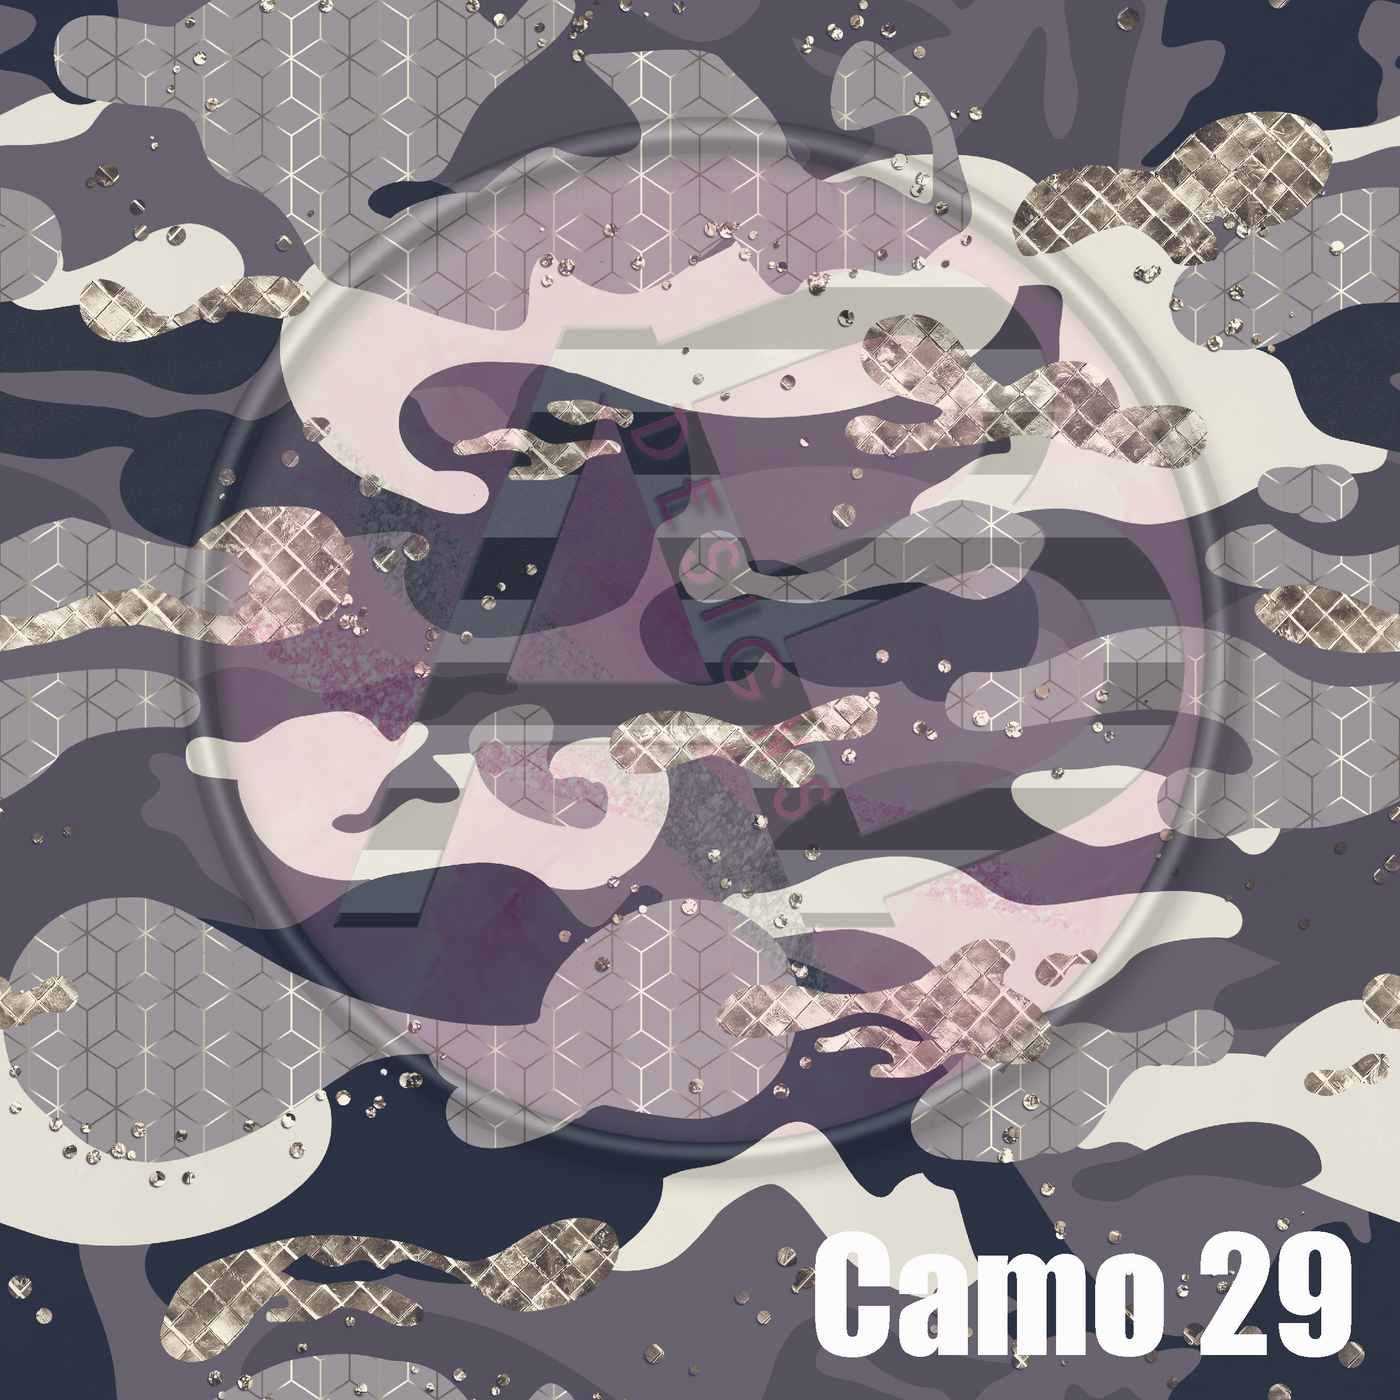 Adhesive Patterned Vinyl - Camo 29